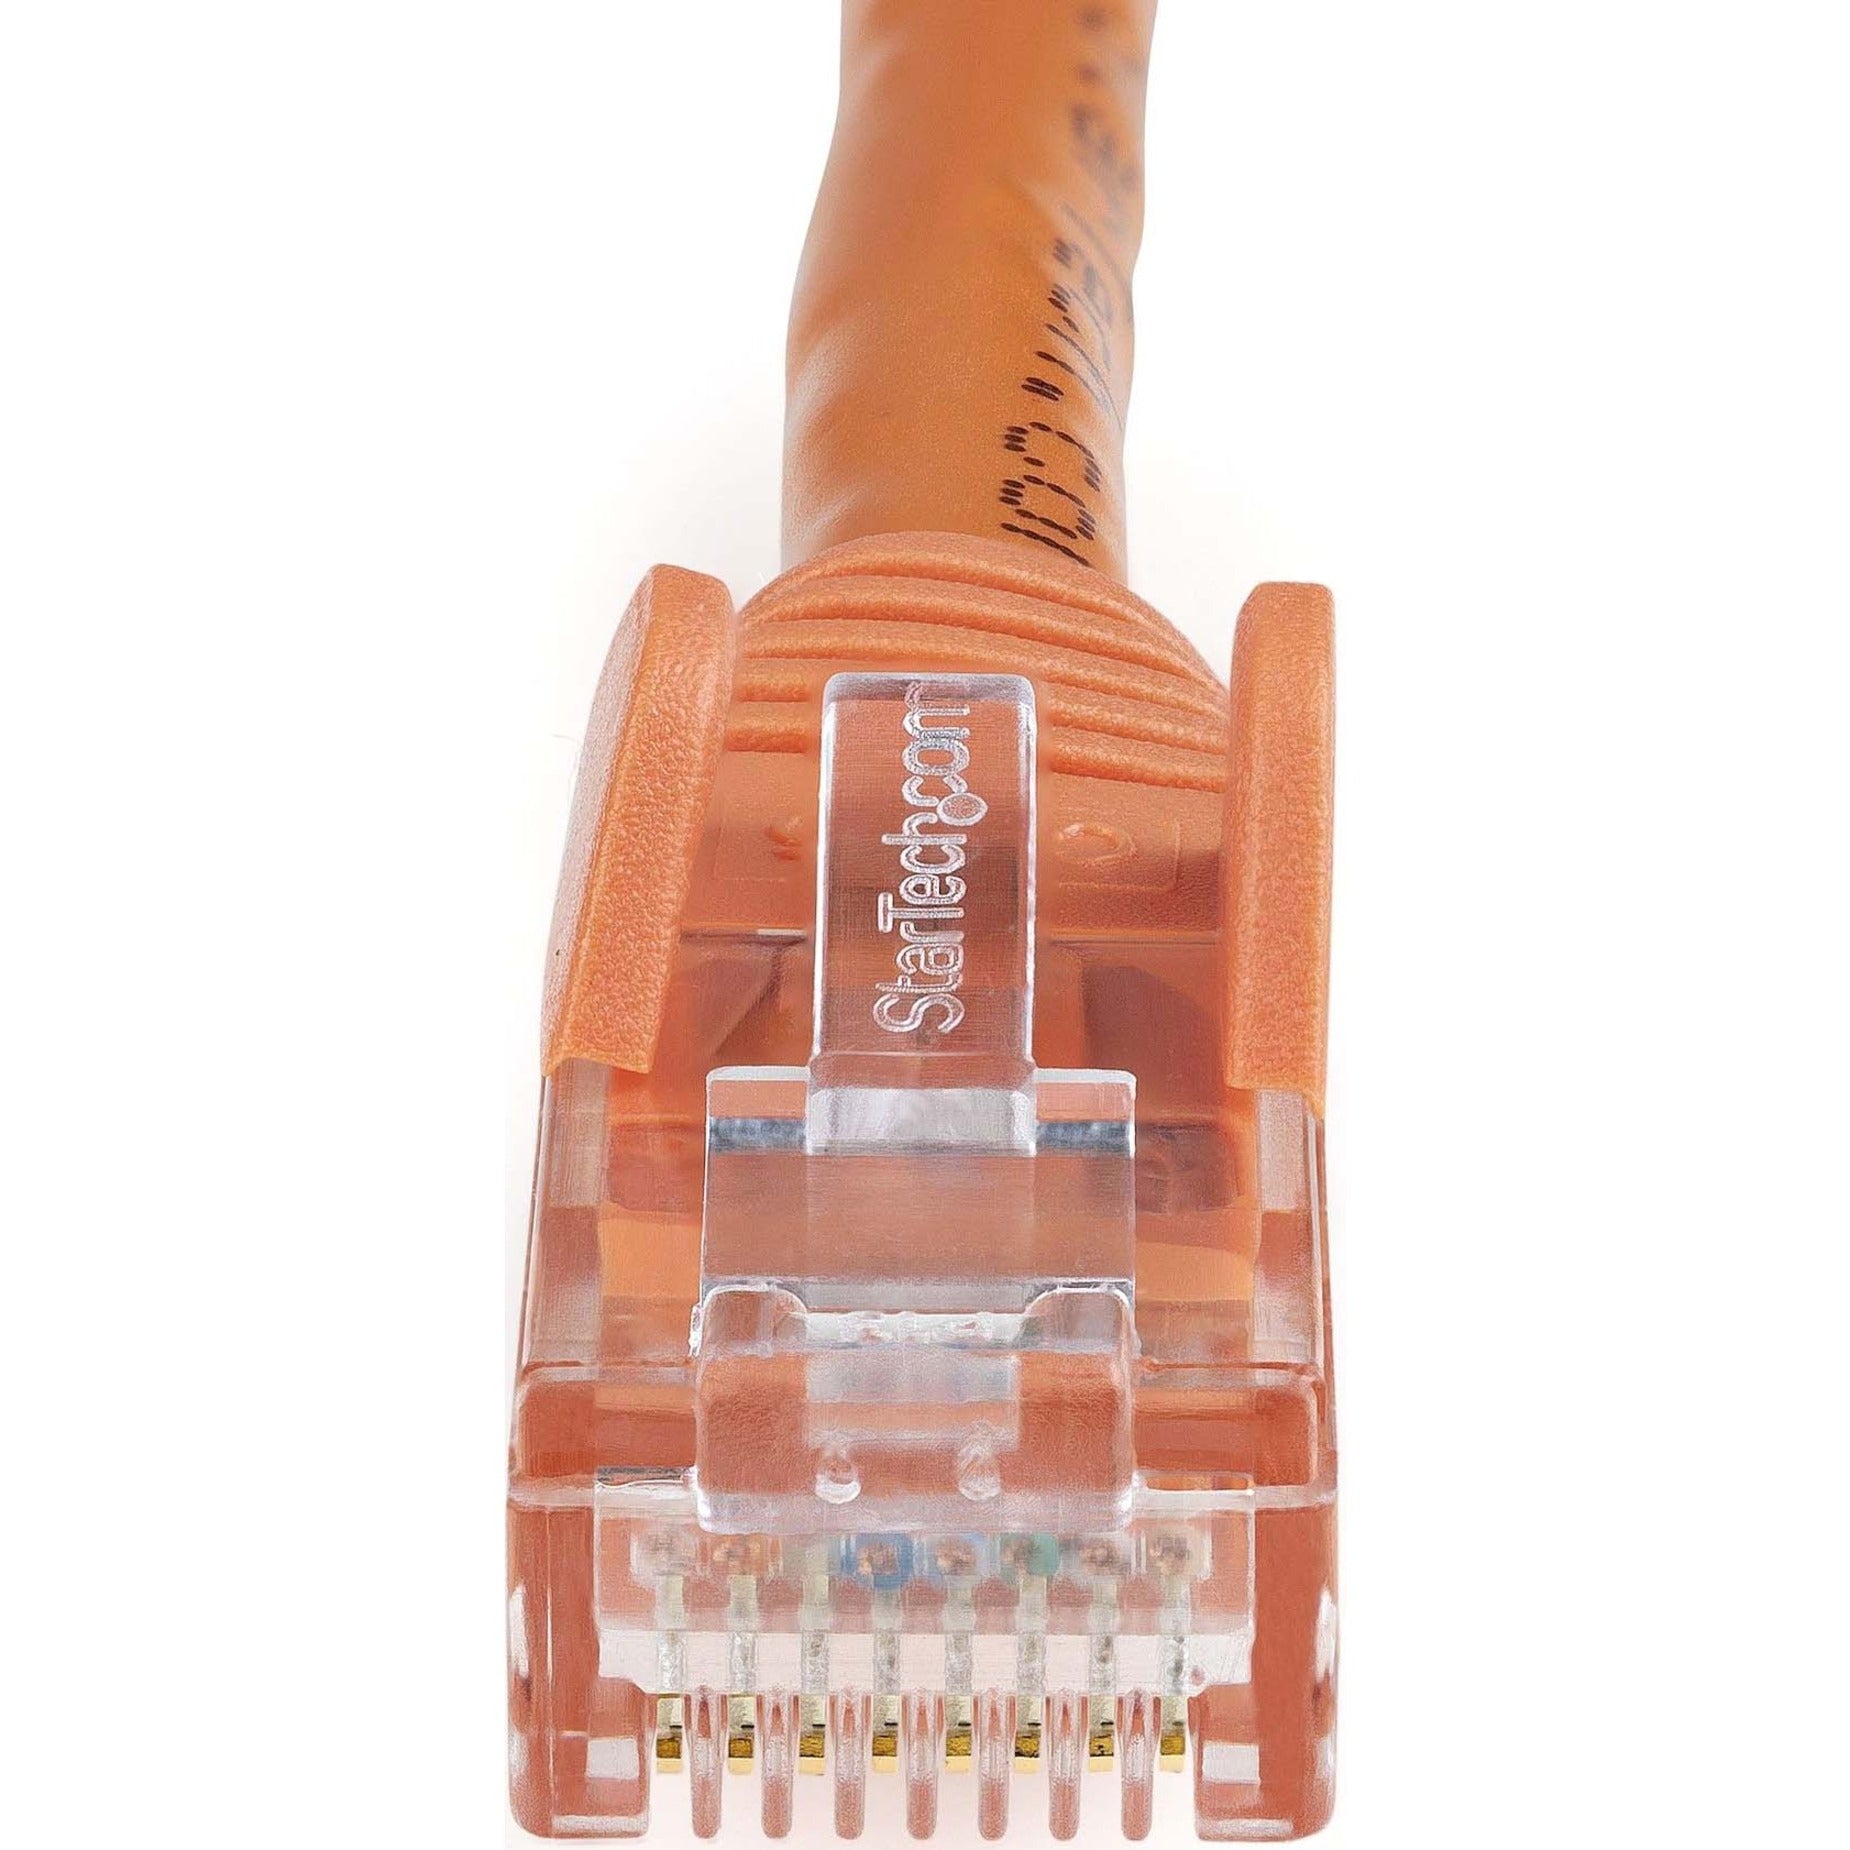 StarTech.com N6PATCH4OR Cat.6 Patch Cable, 4ft Orange Ethernet Cable, Snagless RJ45 Connectors